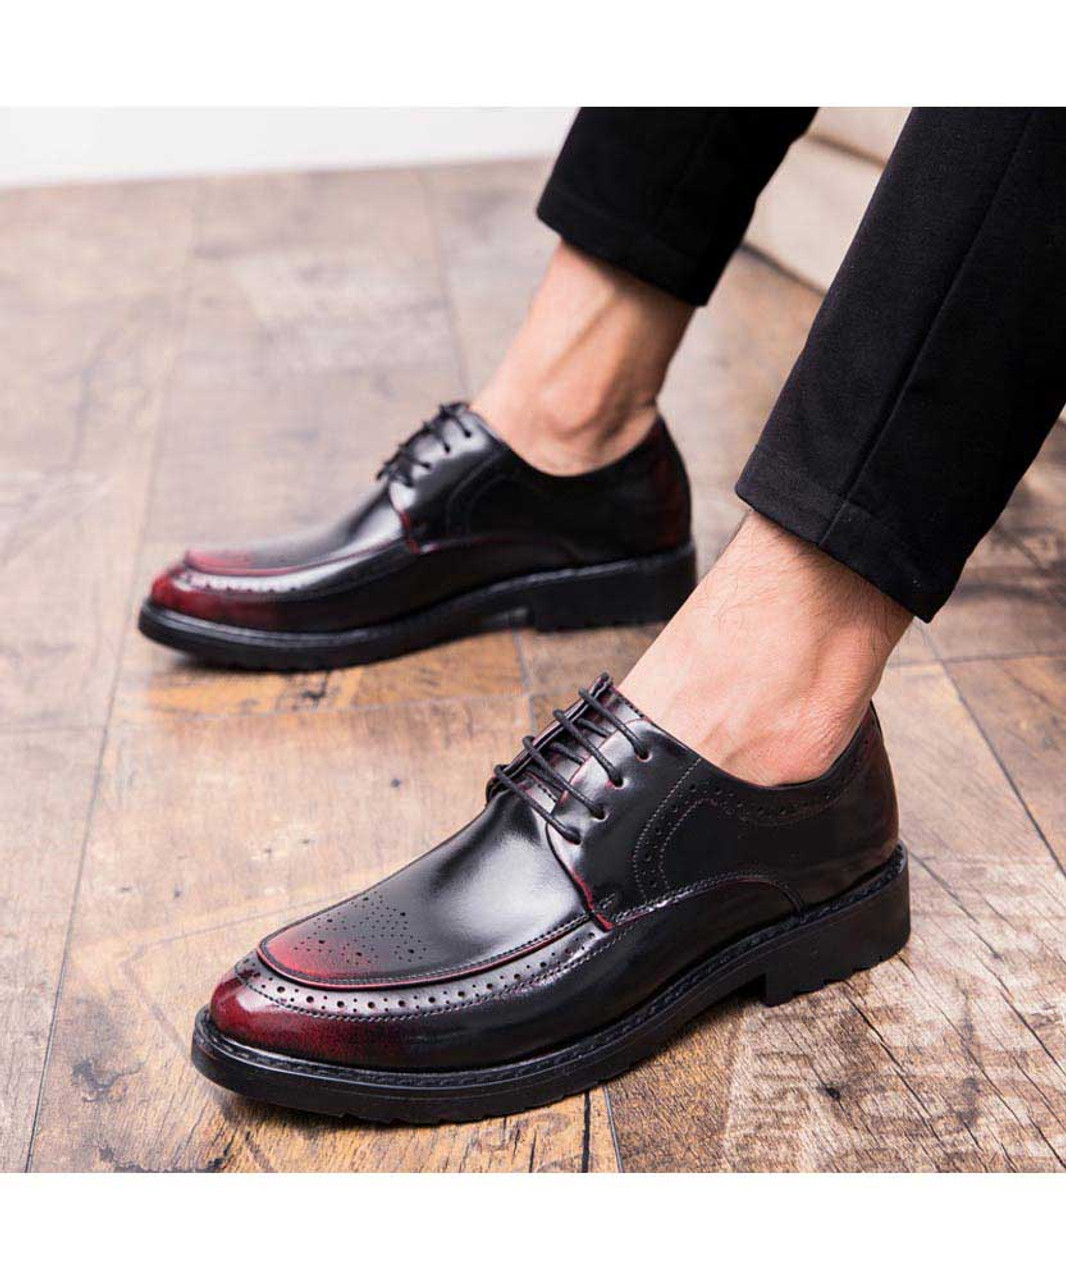 Black red retro brogue leather derby dress shoe | Mens dress shoes ...